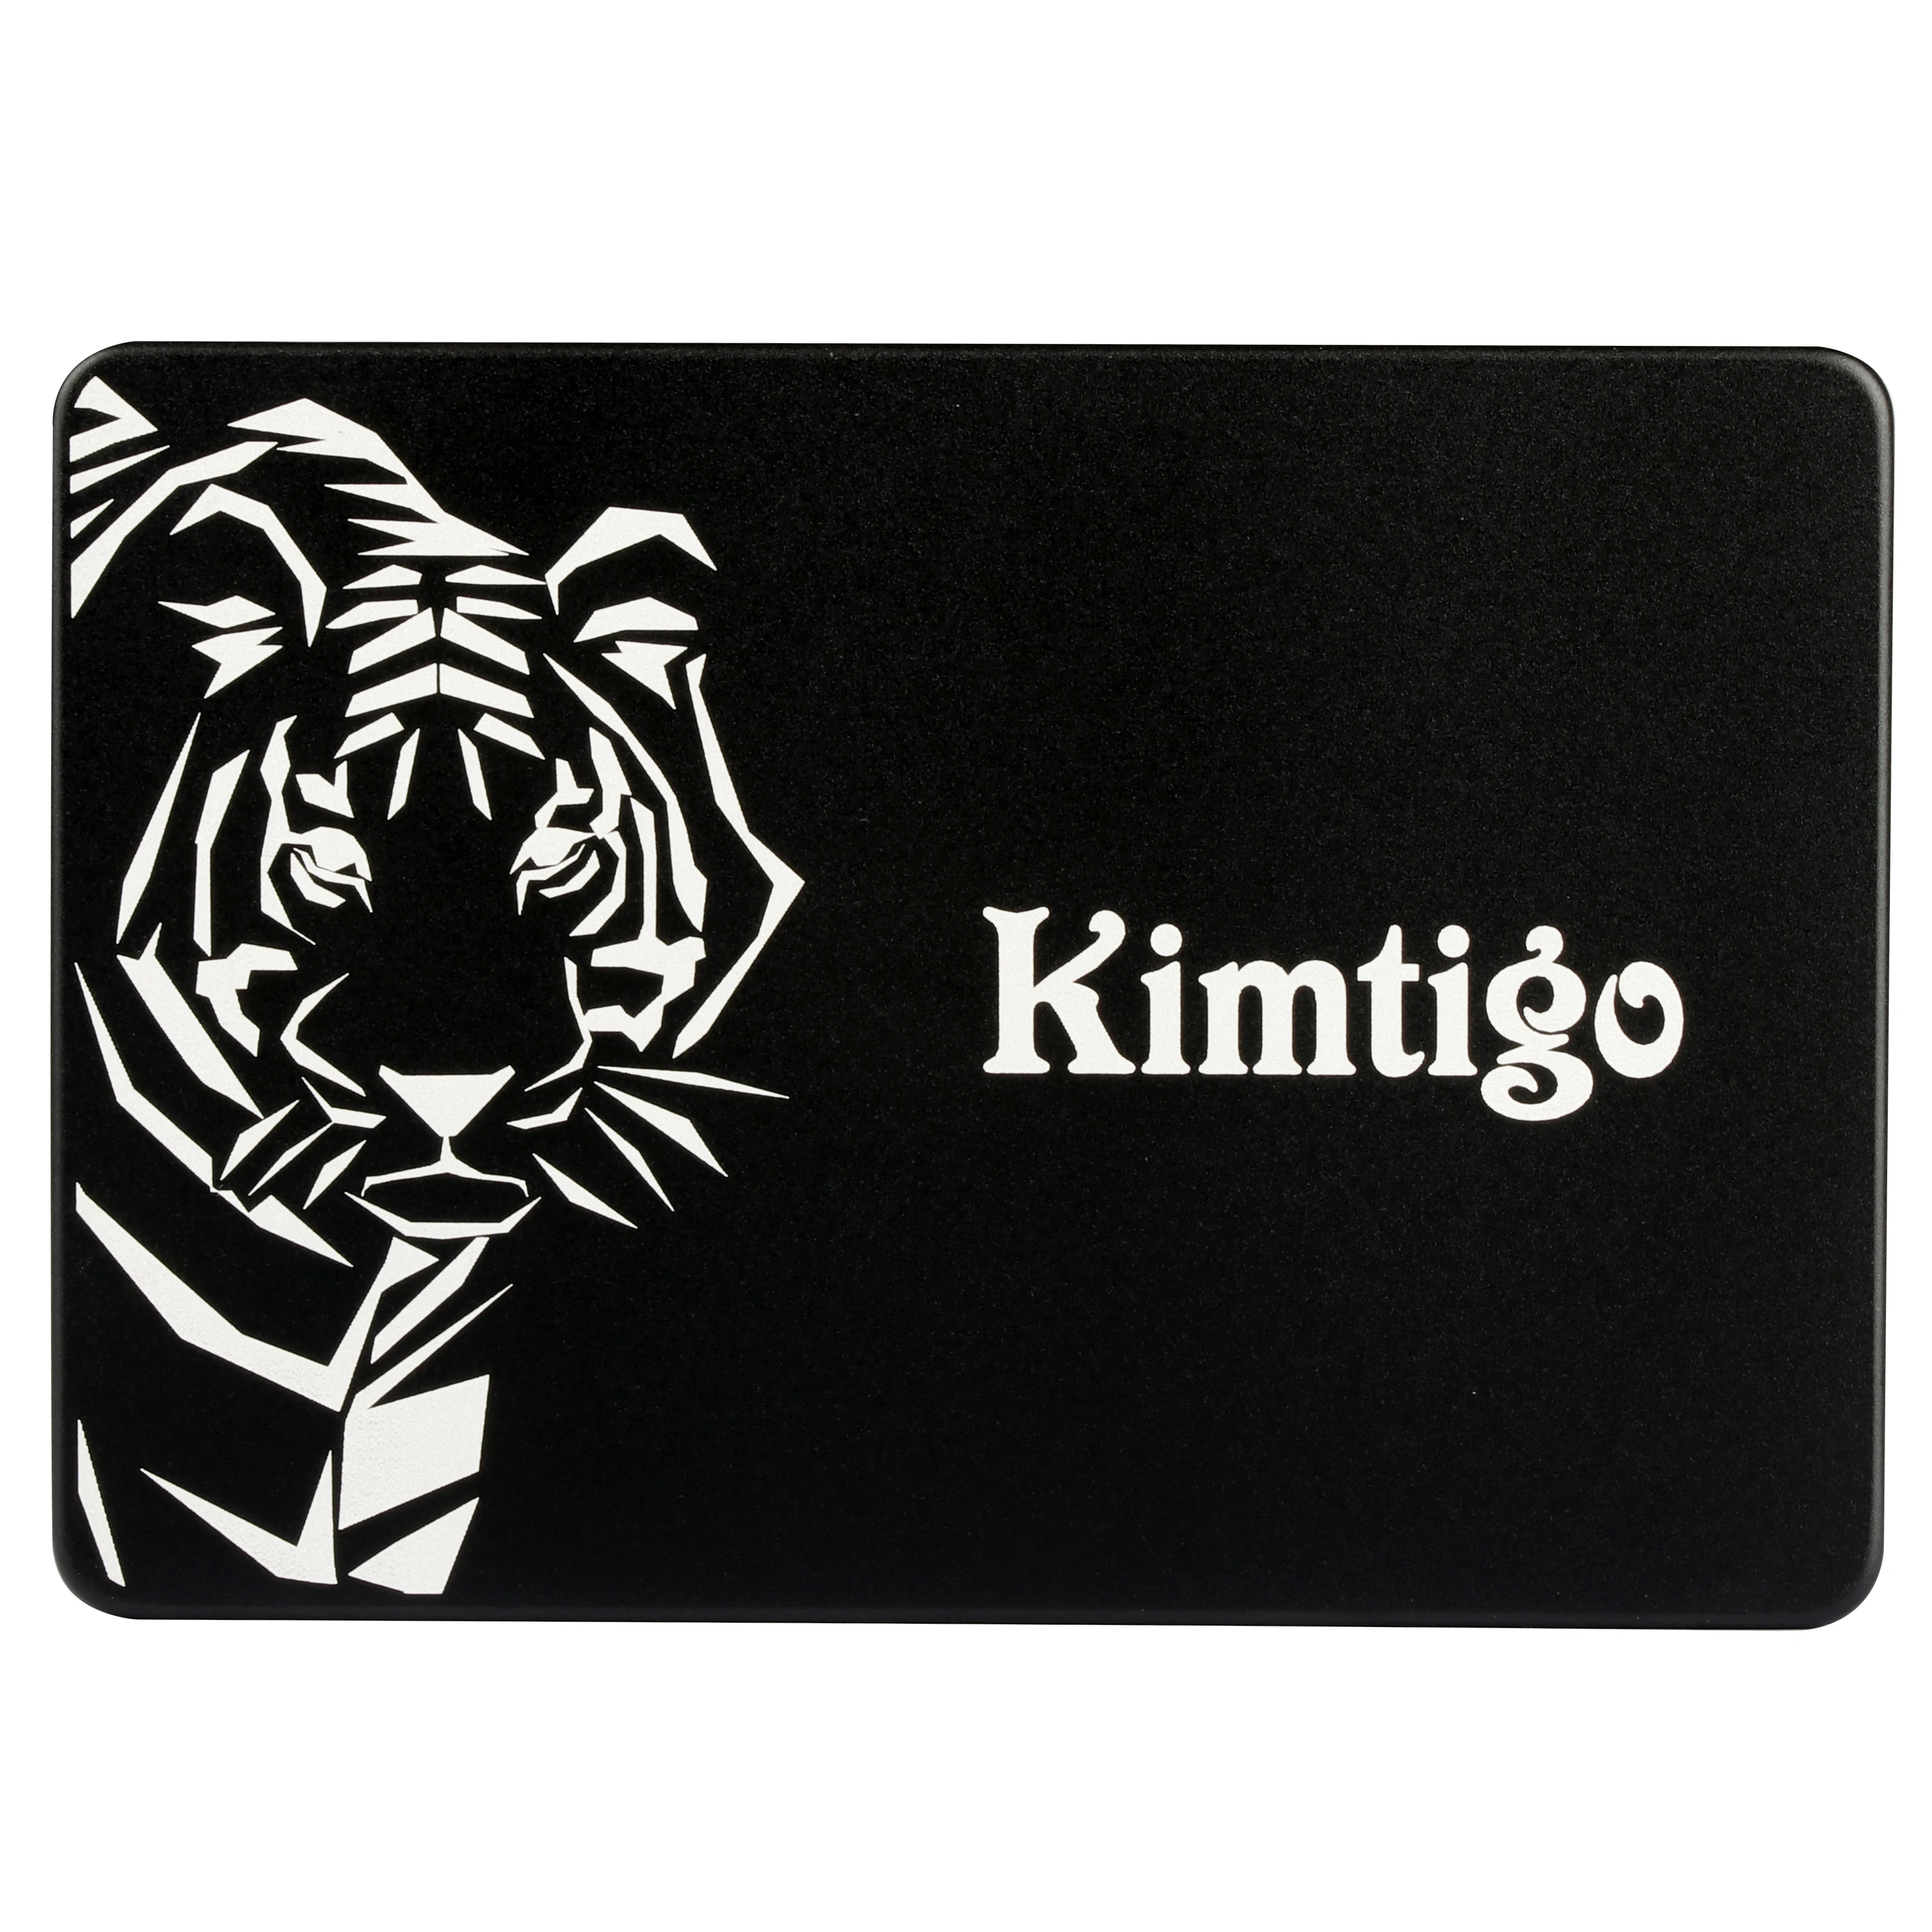 

Kimtigo ssd wholesale hard disk ssd internal drive sata3.0 2.5inch ssd 120GB 240GB 480GB 960GB, Black